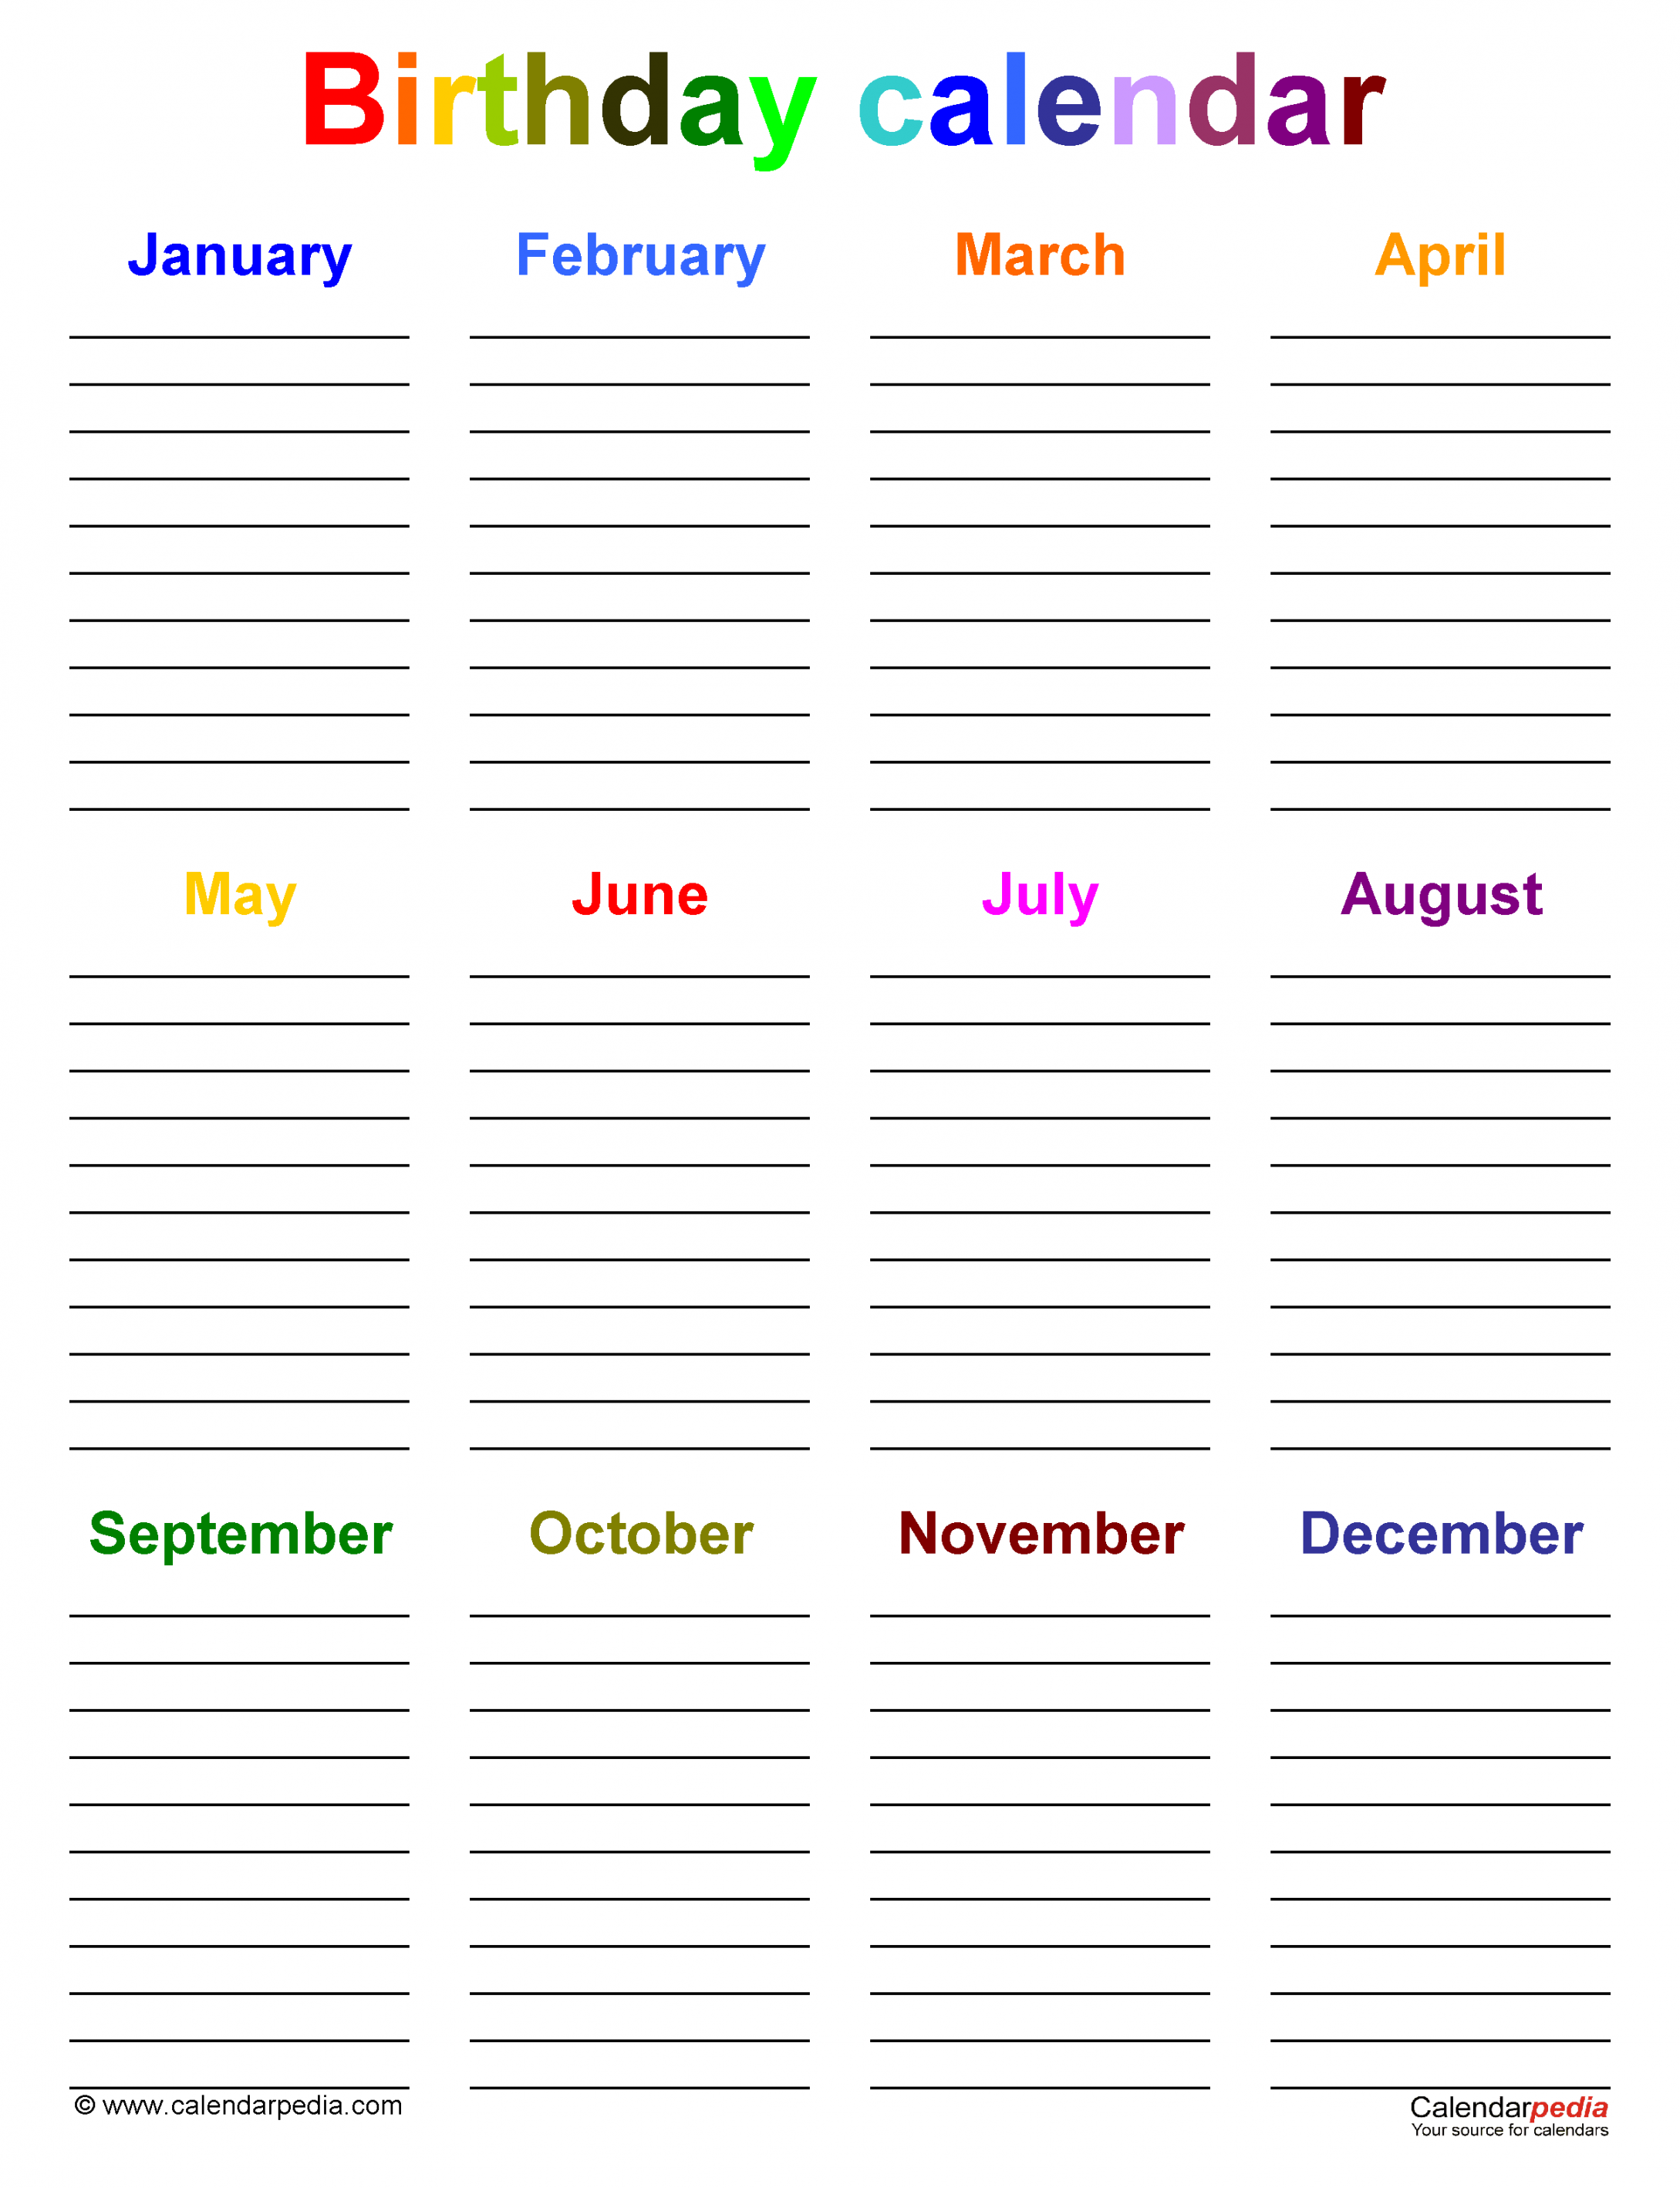 Birthday calendars - Free Printable PDF templates